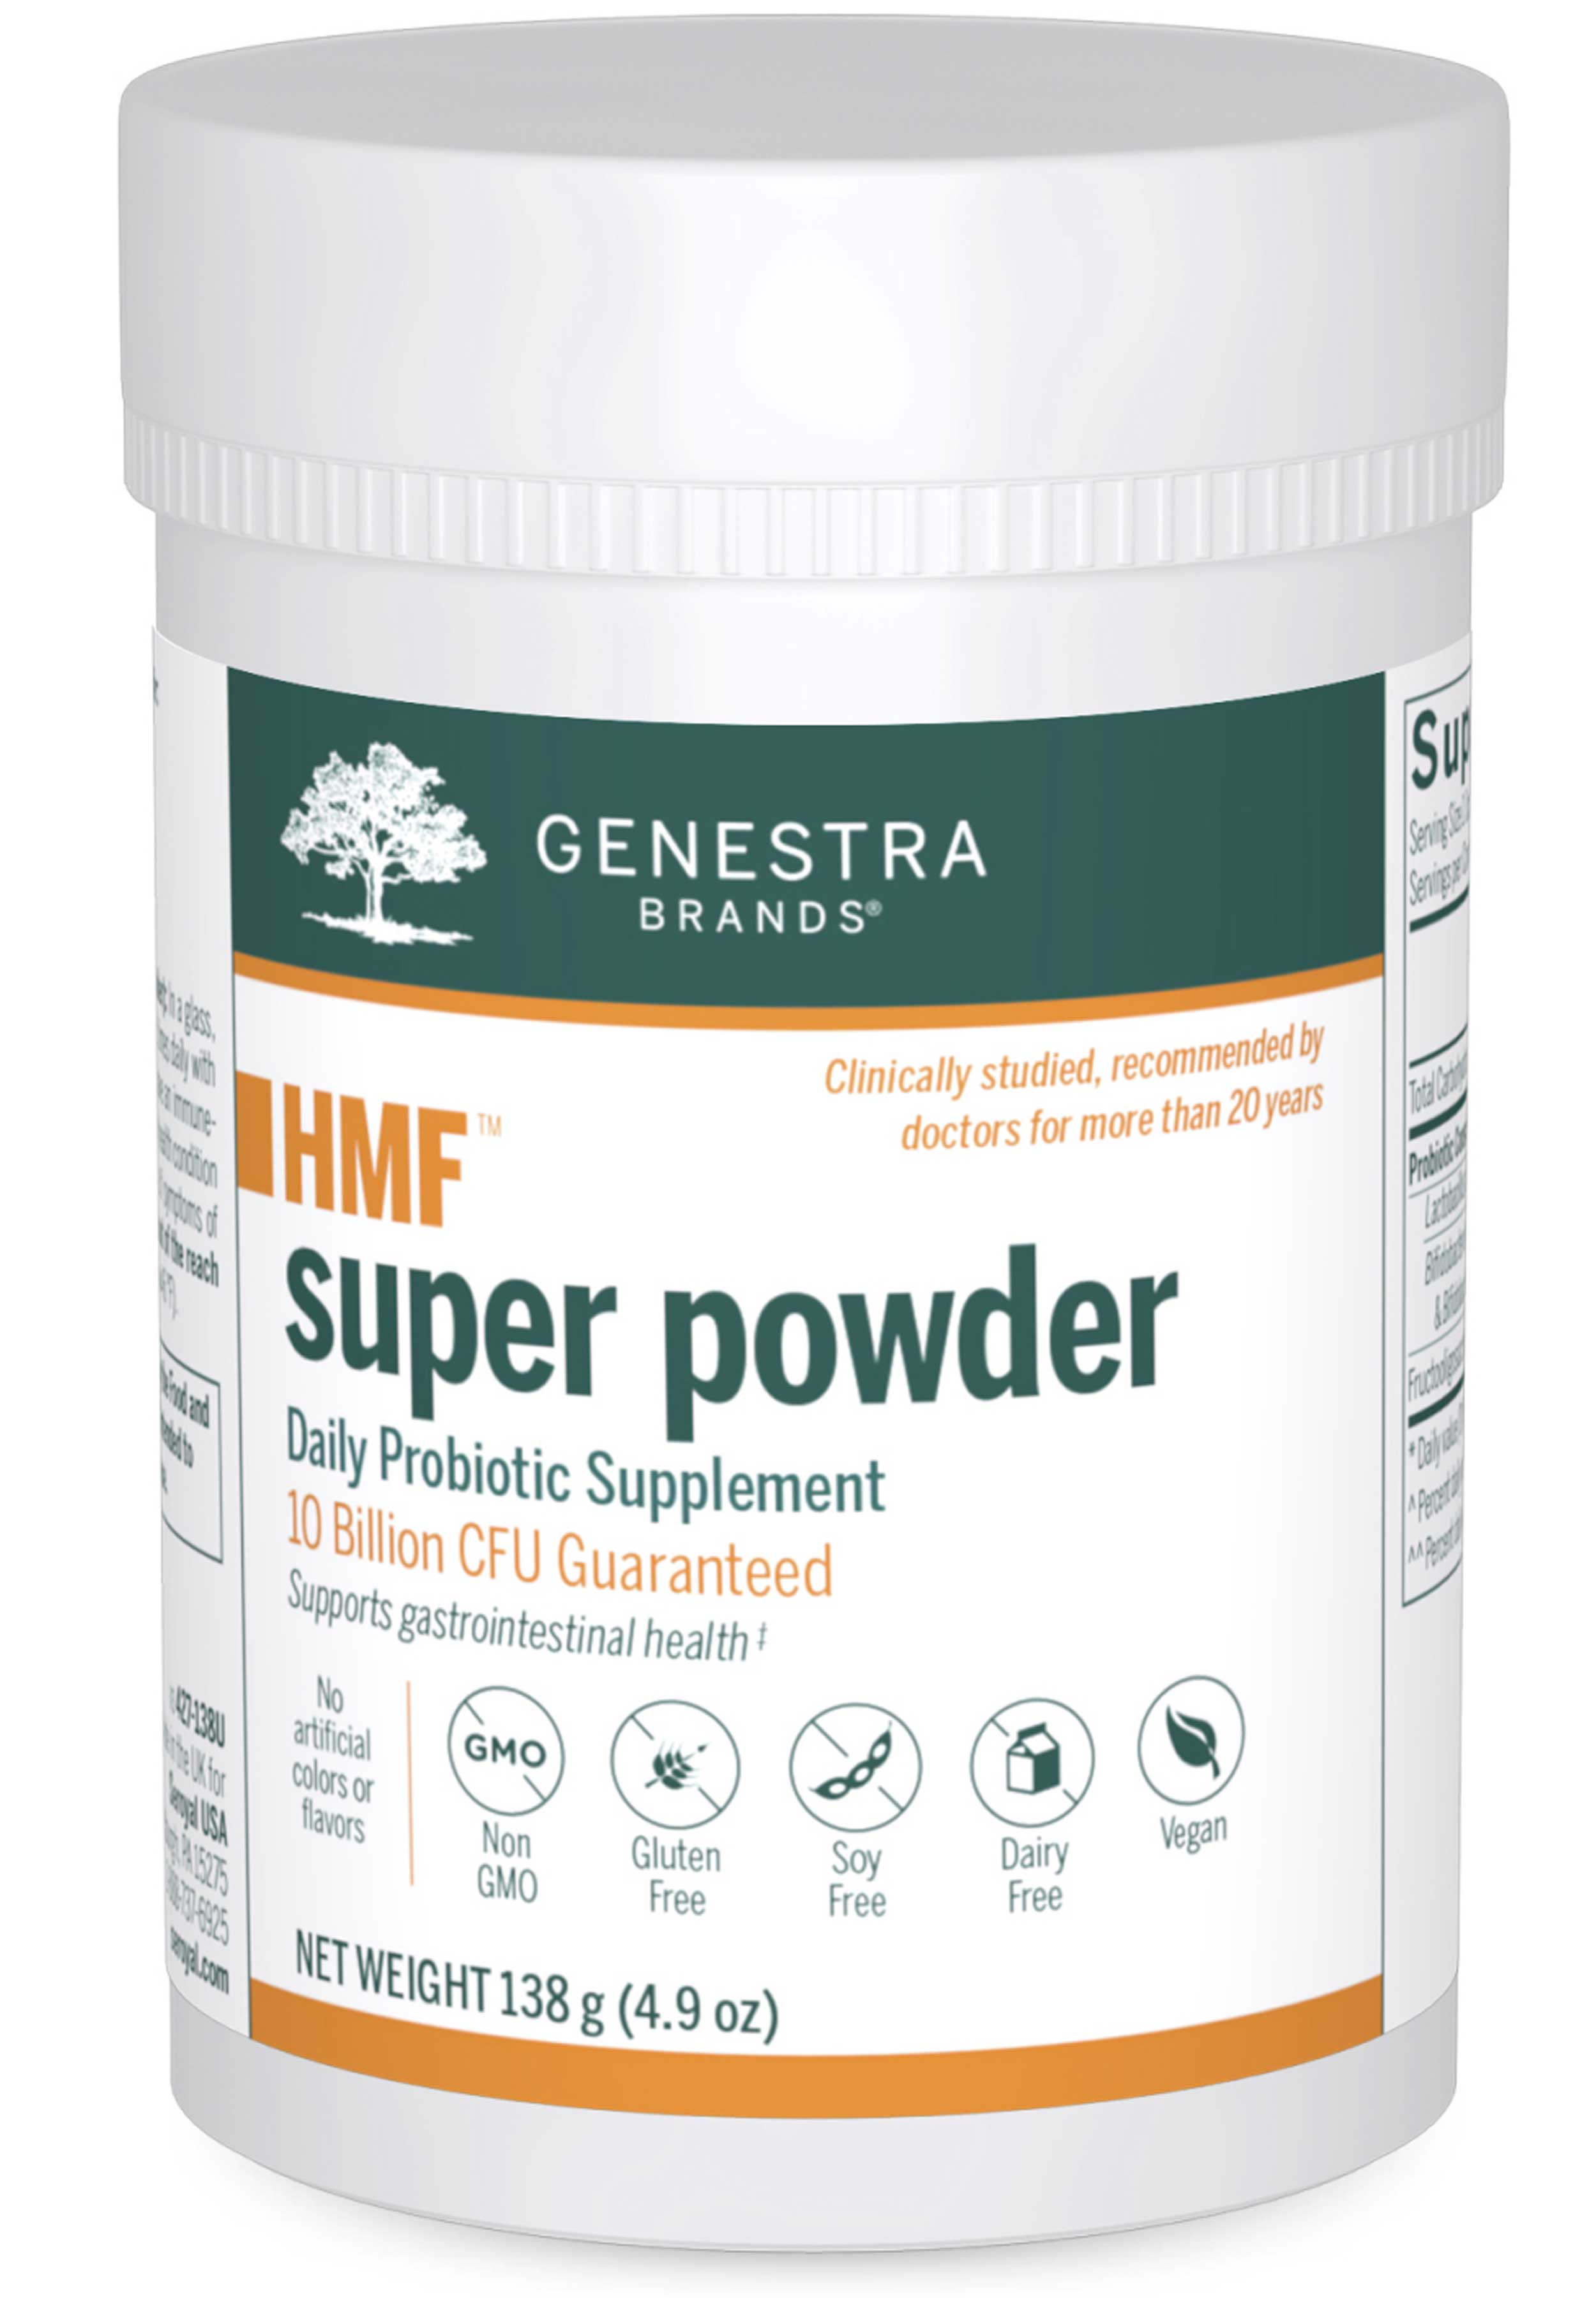 Genestra Brands HMF Super Powder